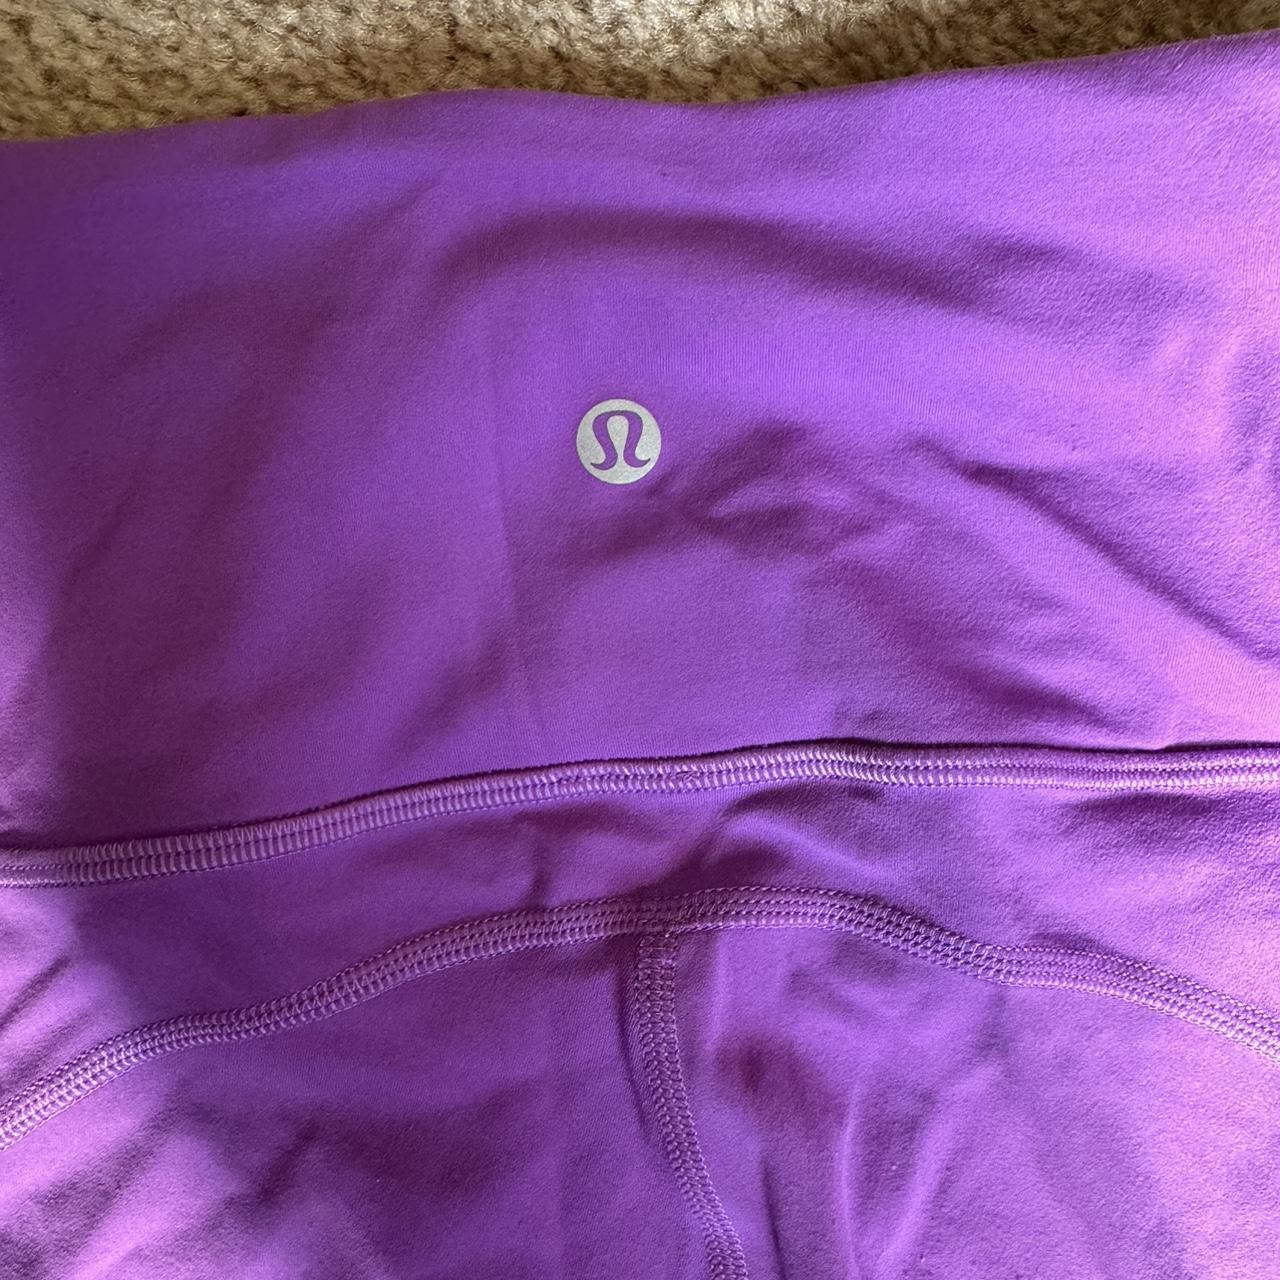 Lululemon size 2 purple flare leggings. I'm not - Depop